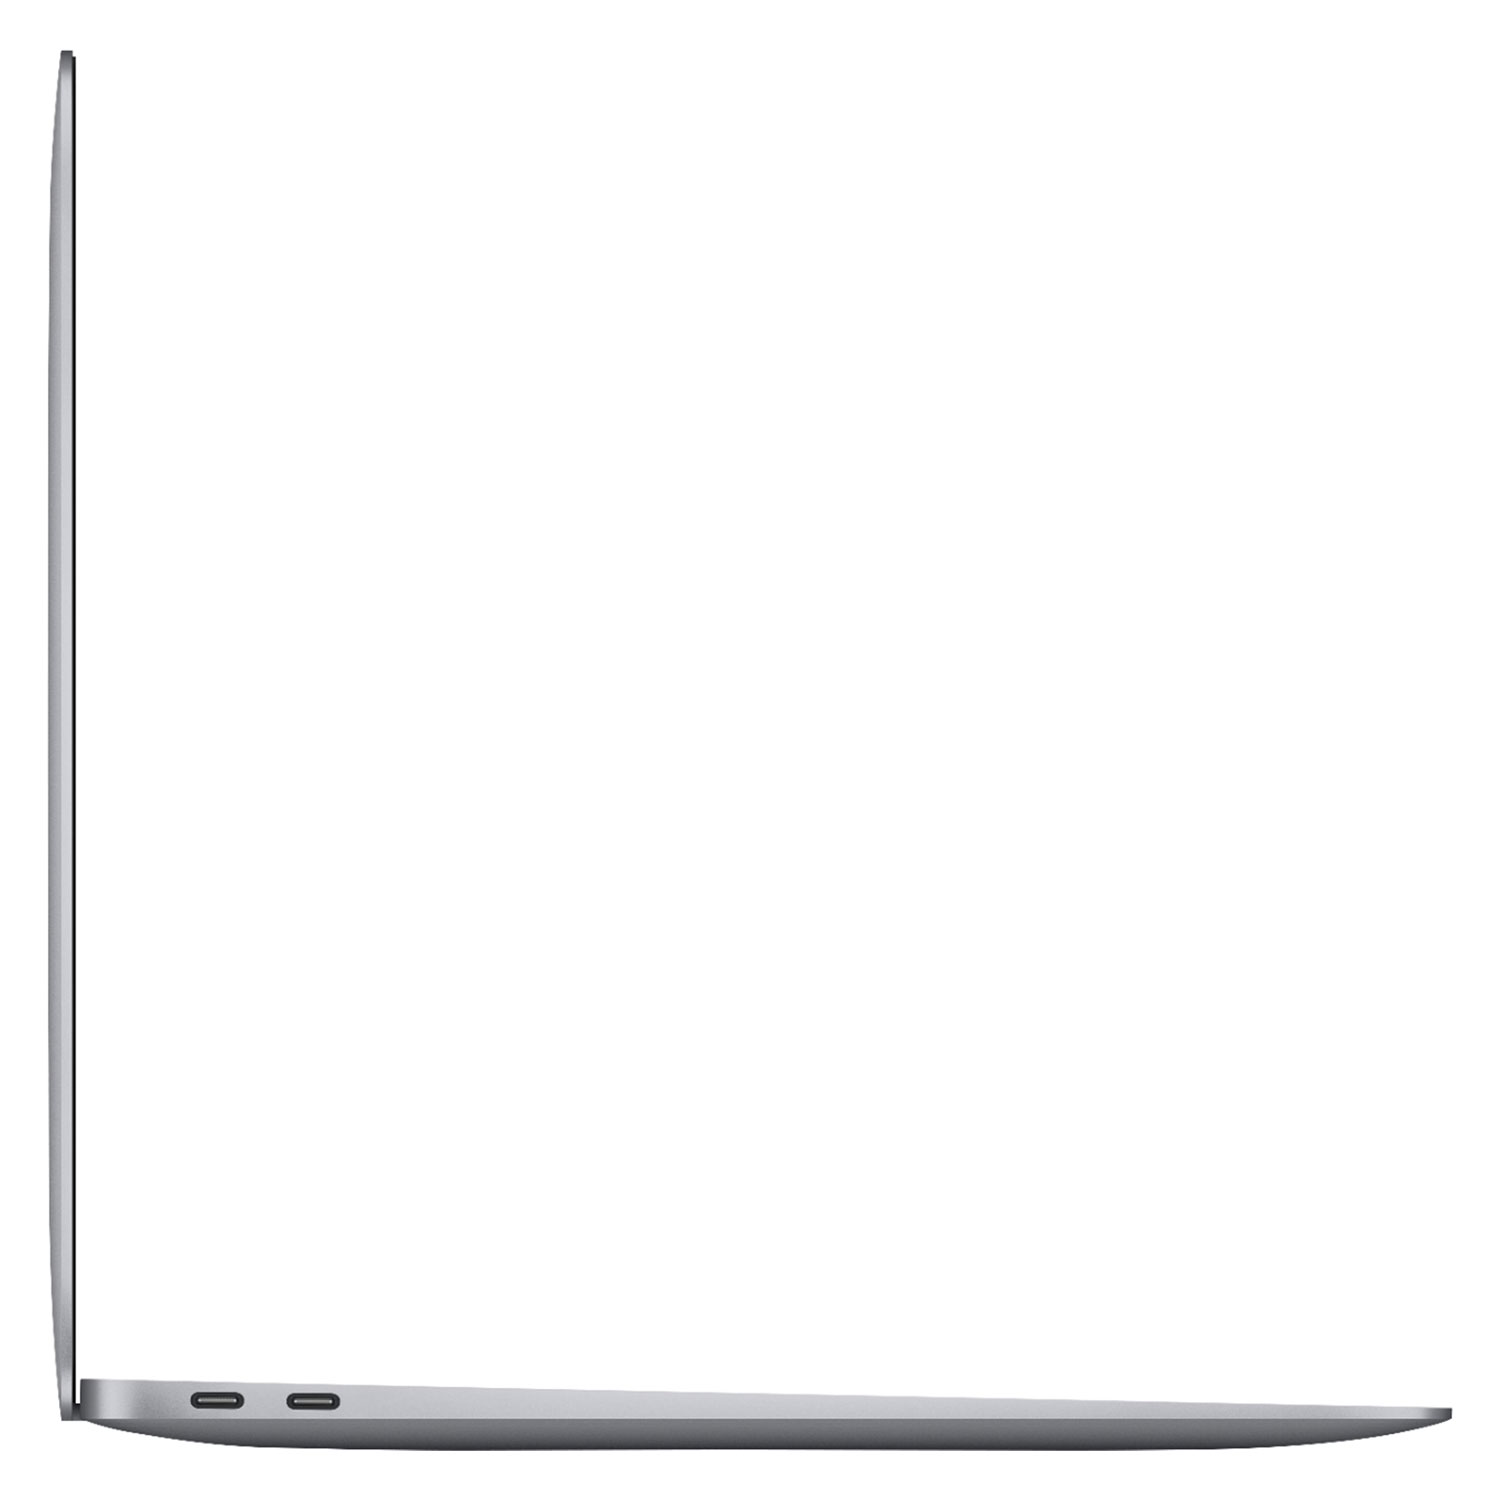 Apple Macbook Air Z1240002B M1 / Memória RAM 8GB / SSD 256GB / Tela 13.3" - Gray (2020)
